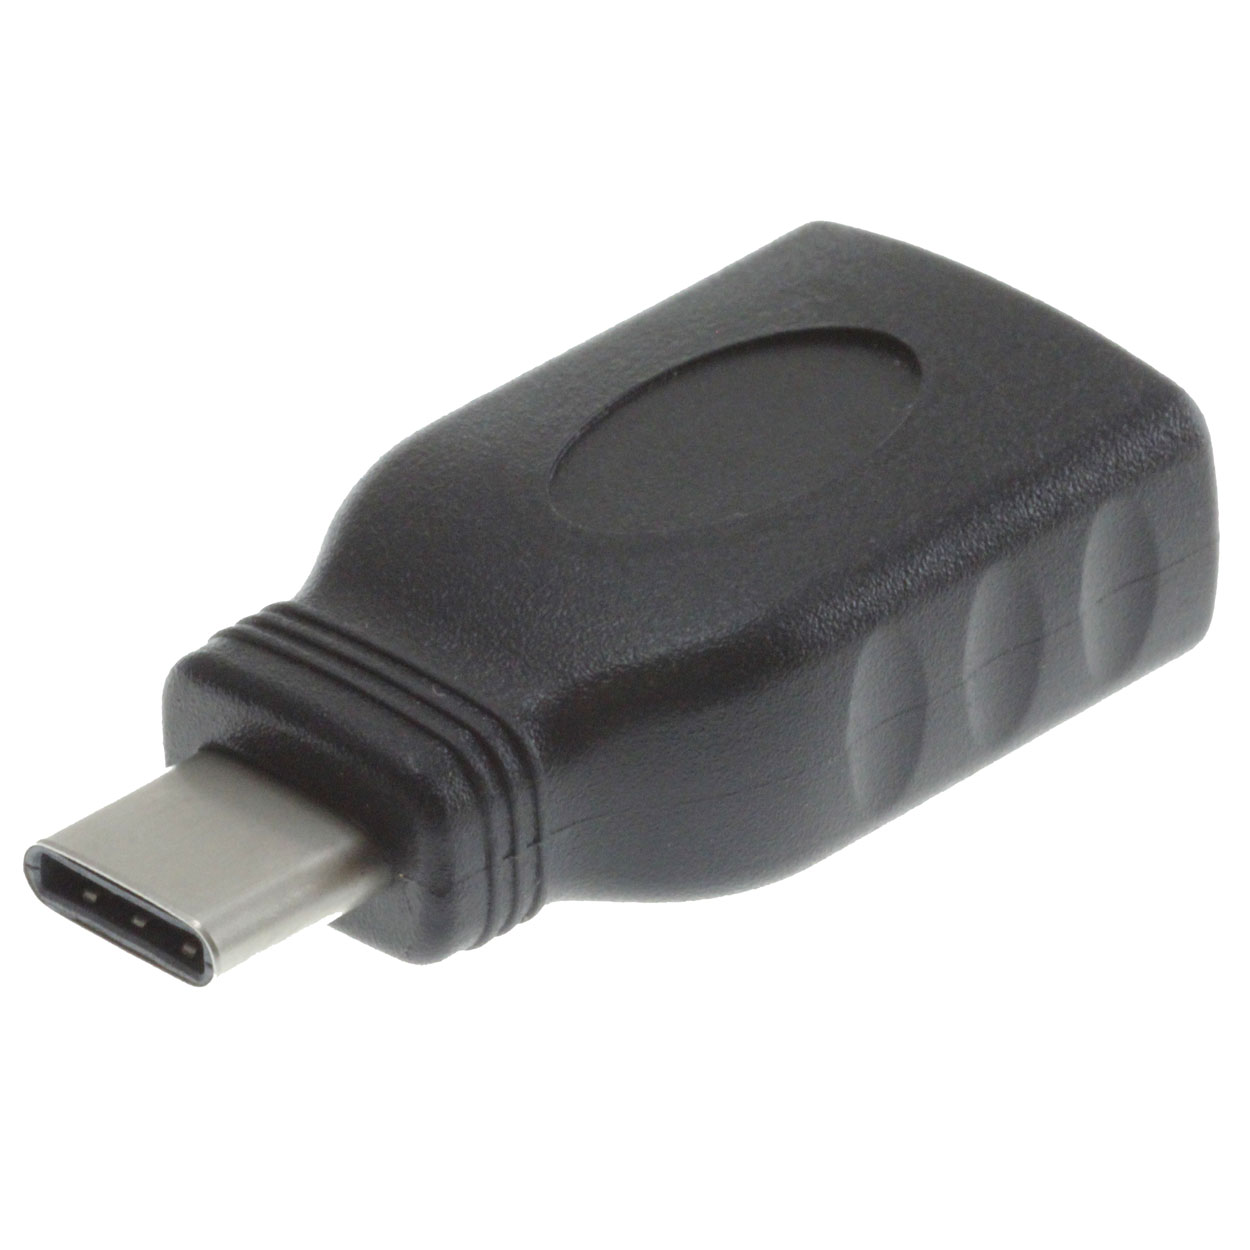 USB-C Male to USB A Female USB 3.0 Adapter